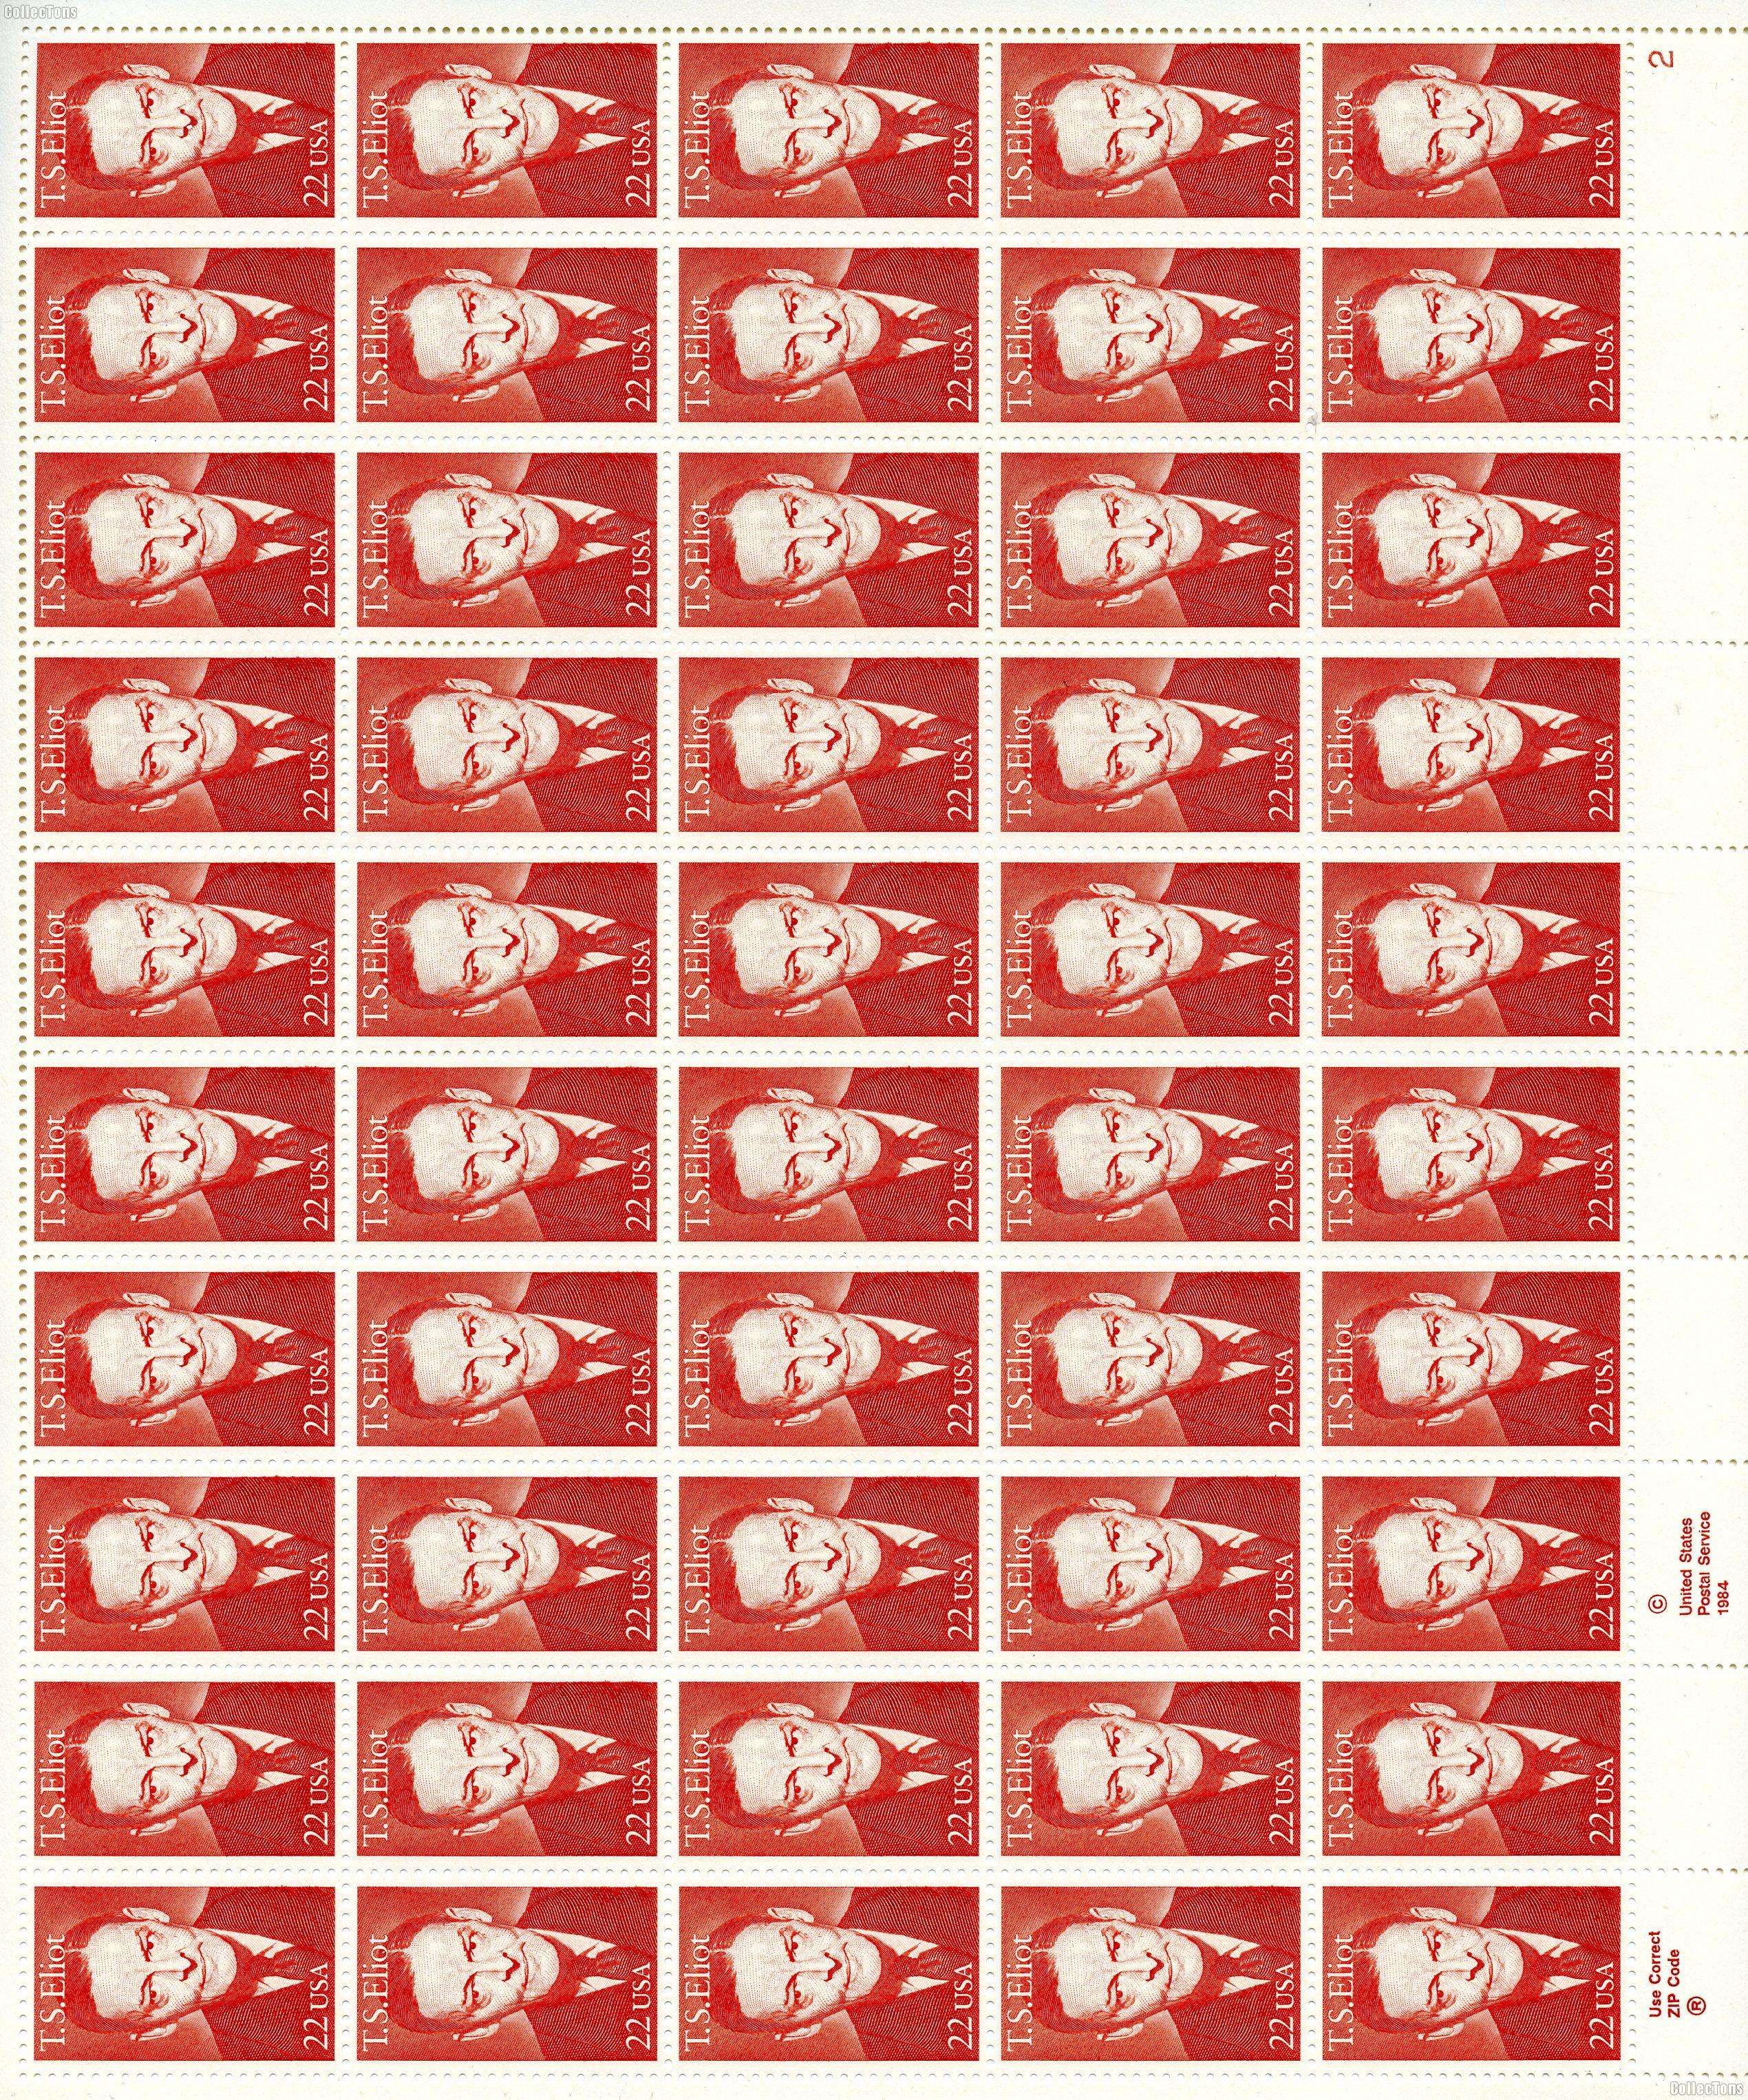 1986 T.S. Eliot 22 Cent US Postage Stamp MNH Sheet of 50 Scott #2239